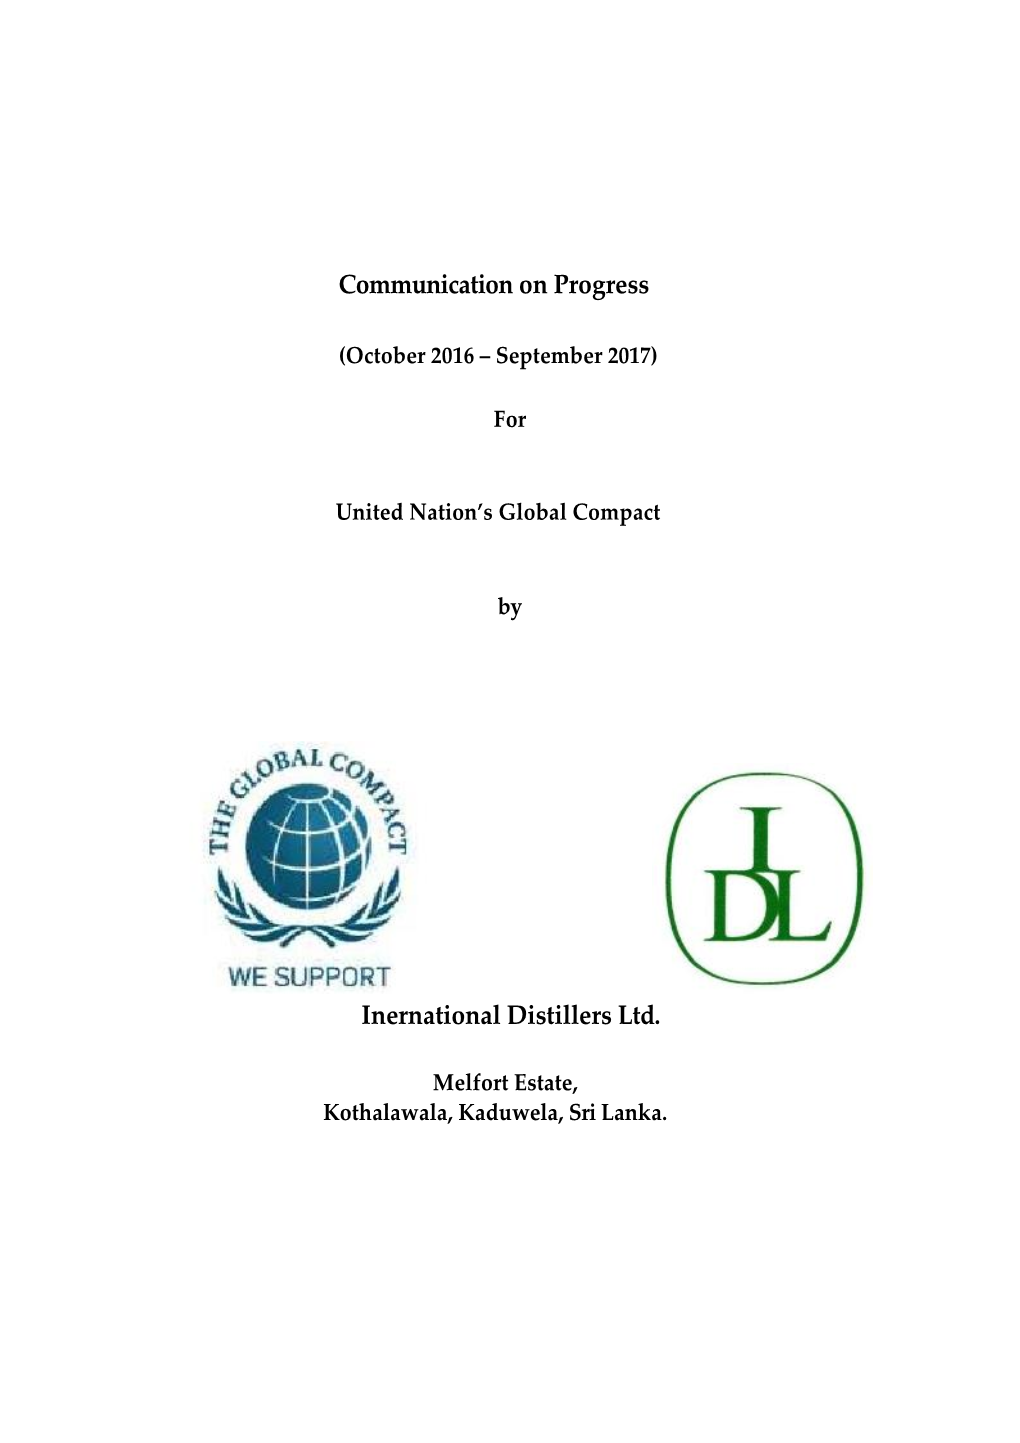 Communication on Progress Inernational Distillers Ltd